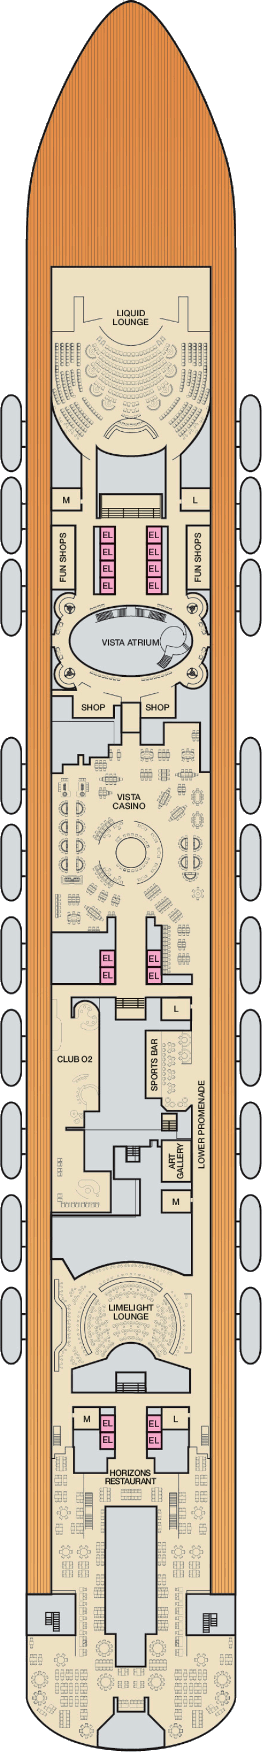 Carnival Vista Mezzanine Deck Plan